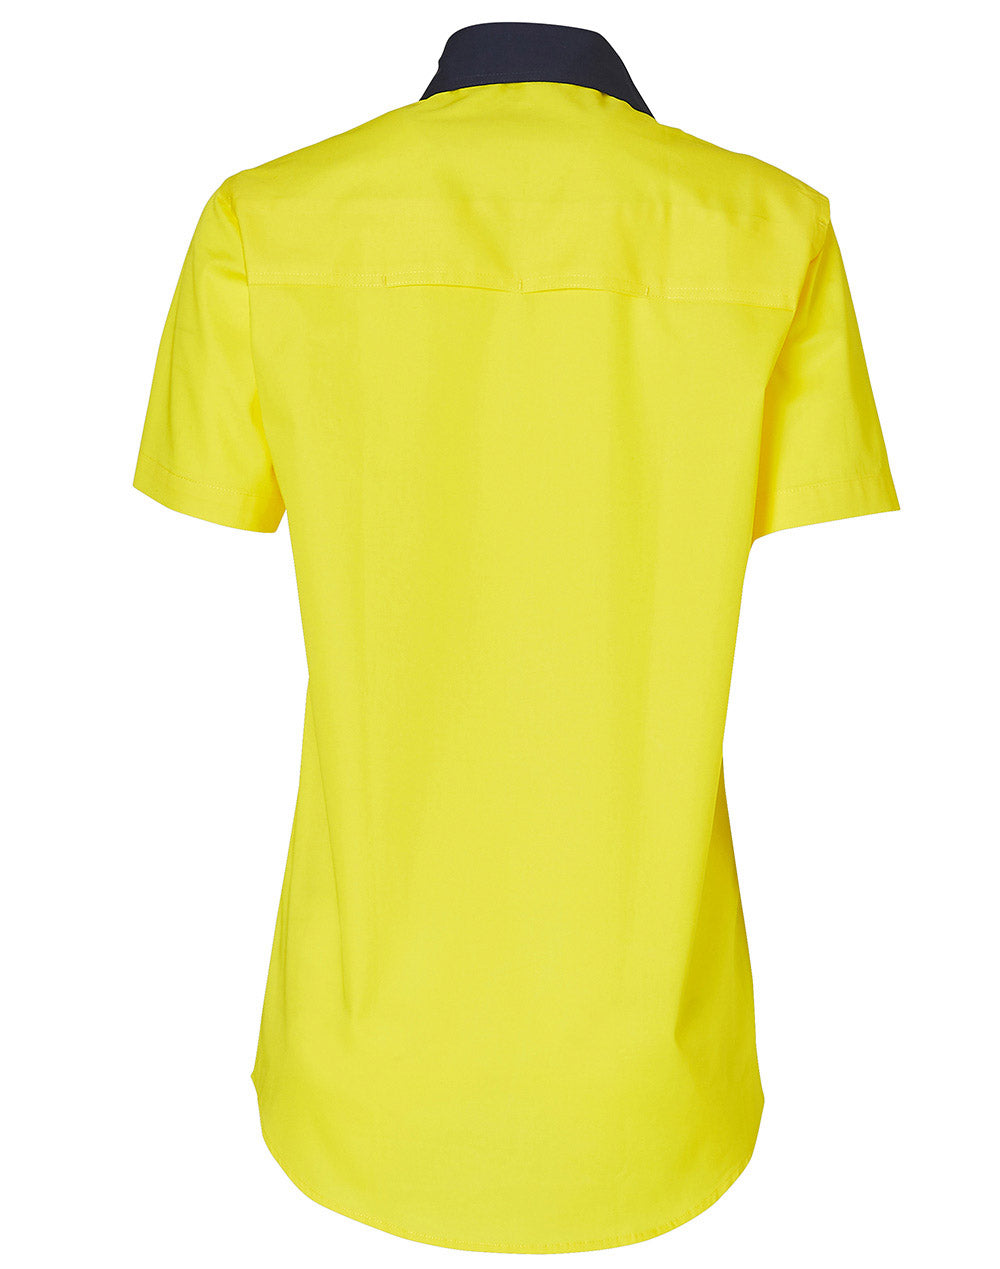 Winning Spirit Womens Short Sleeve Safety Shirt-(SW63)